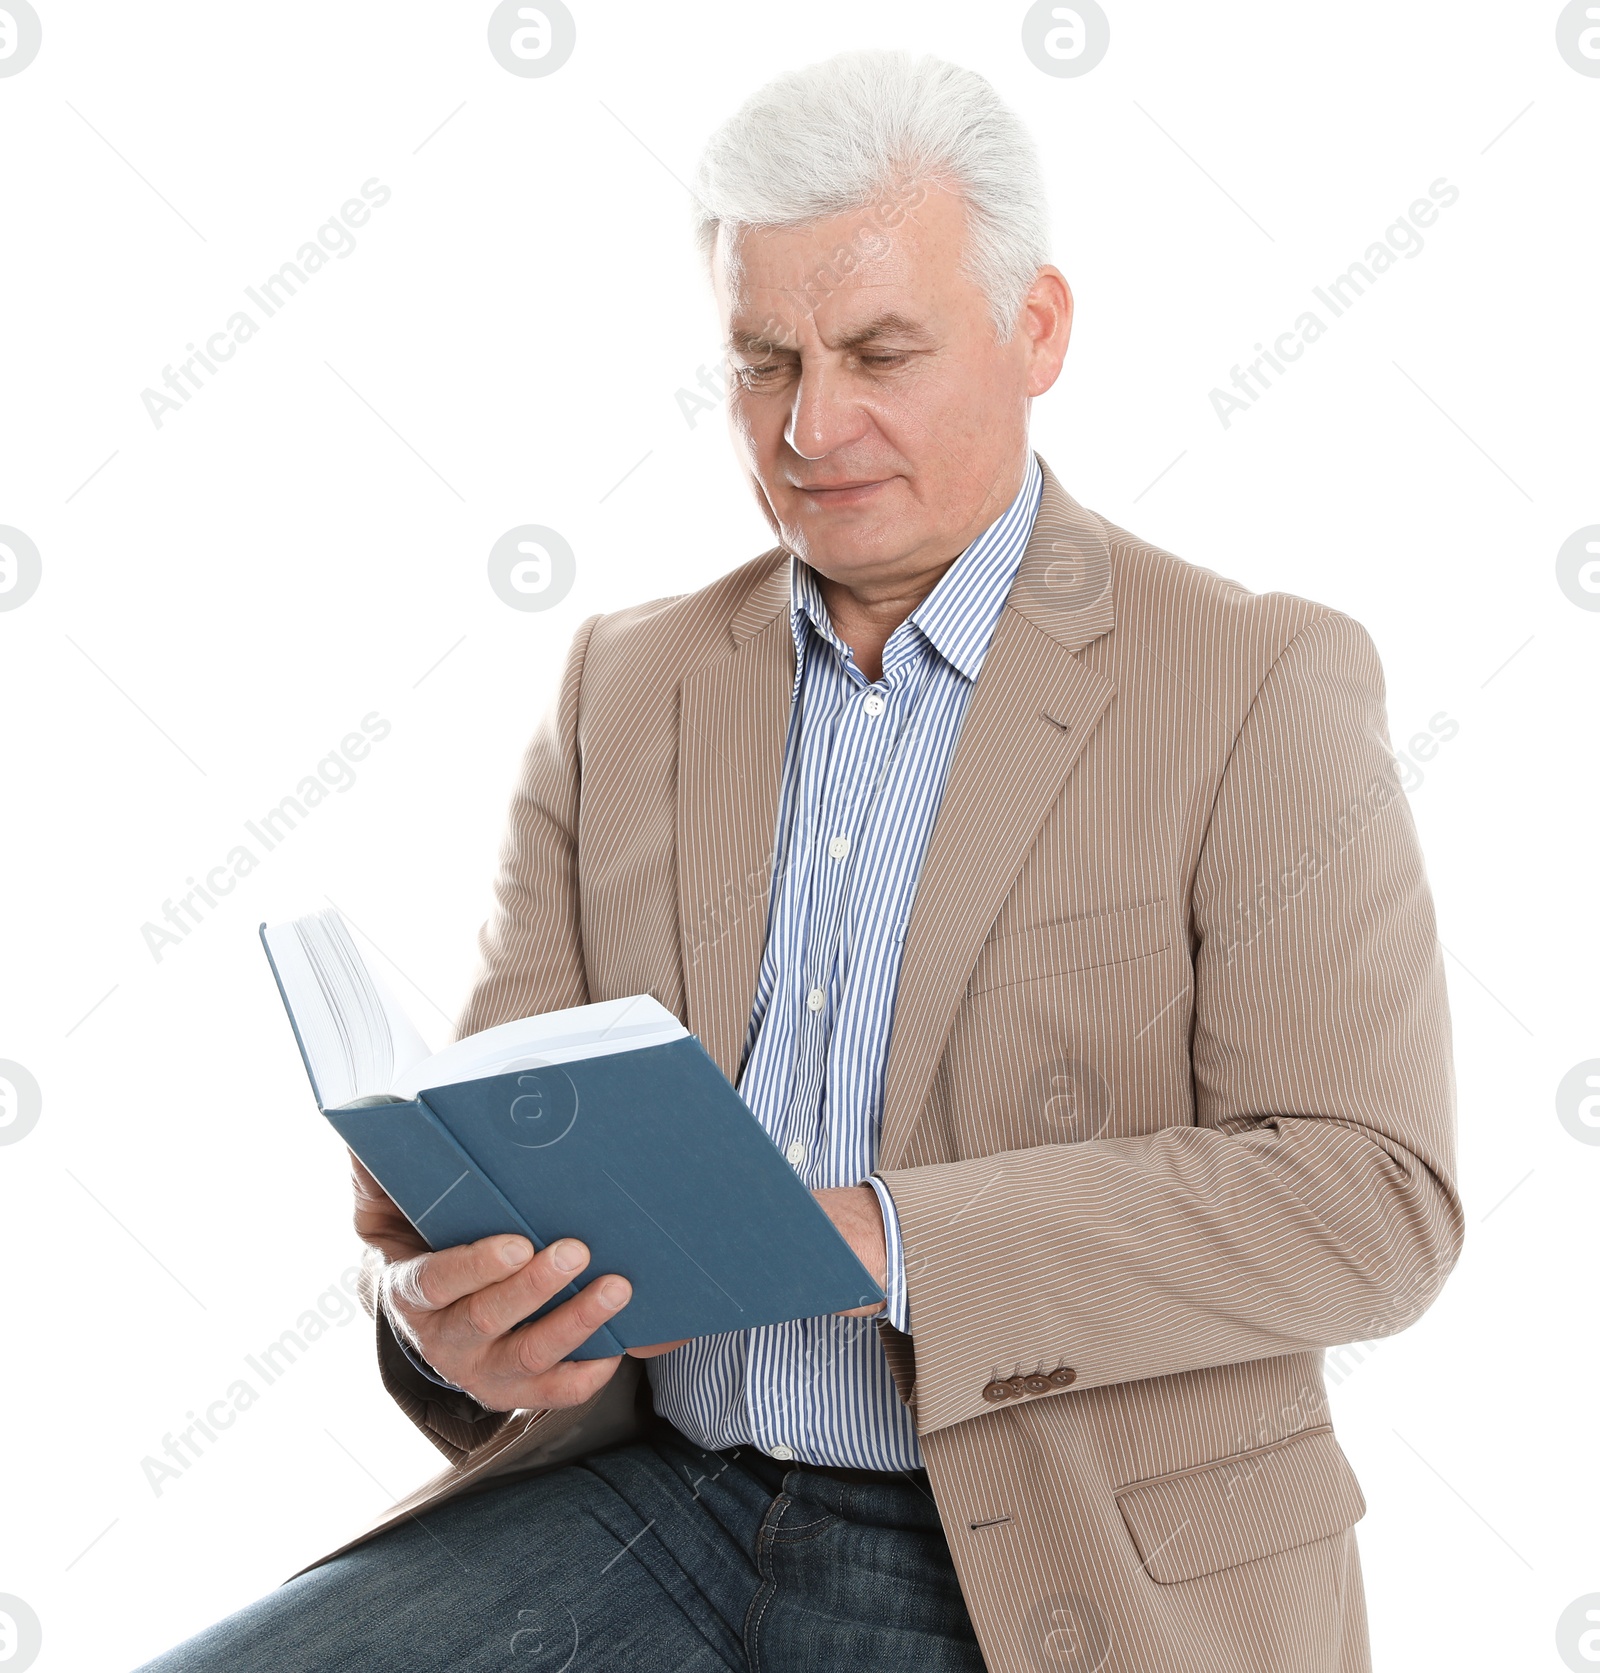 Photo of Senior man reading book on white background